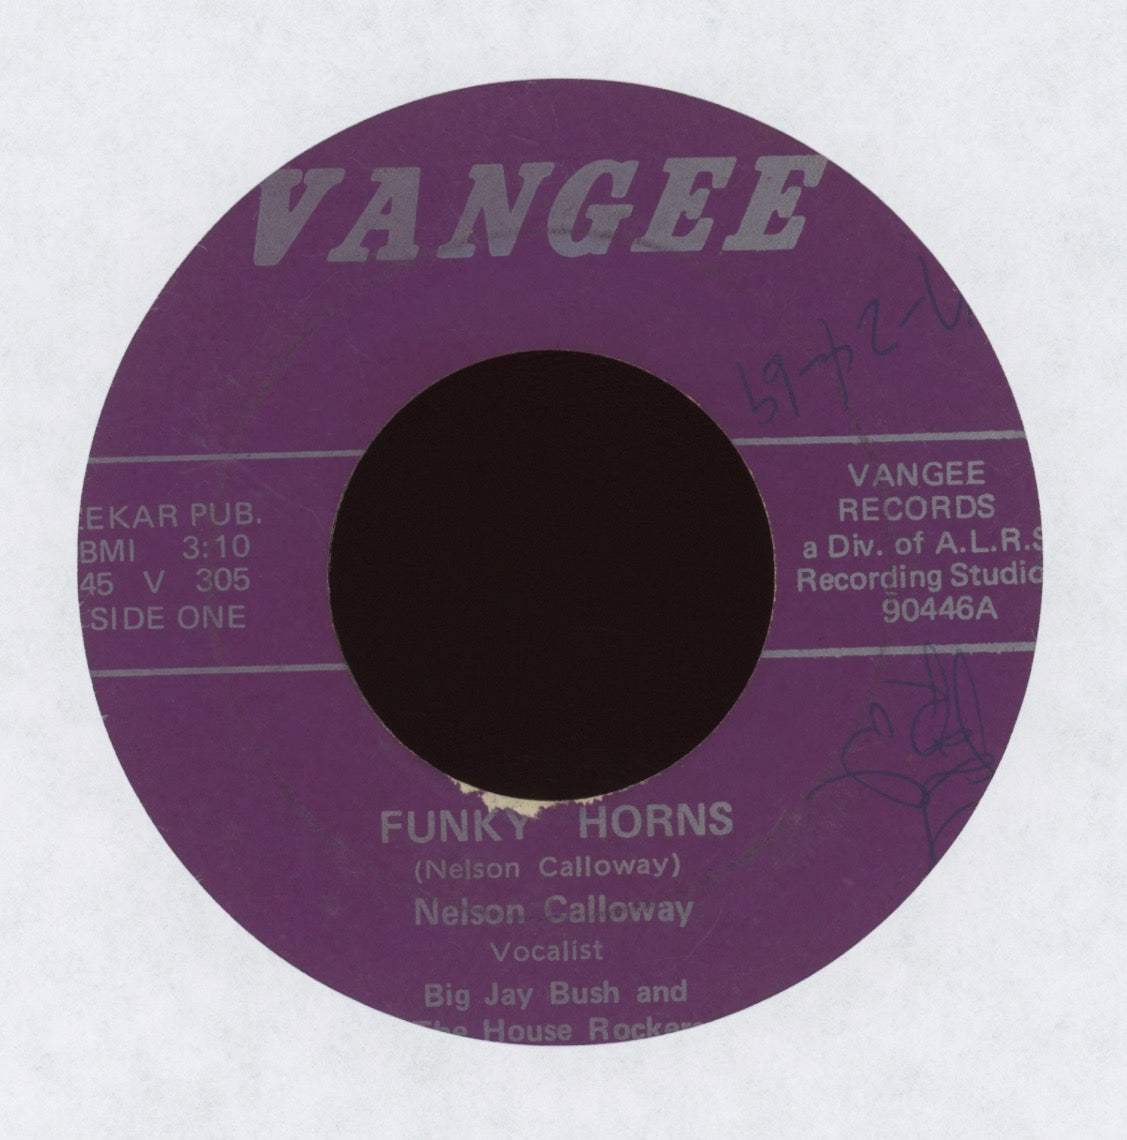 Big Jay Bush & The House Rockers - Funky Horns on Vangee